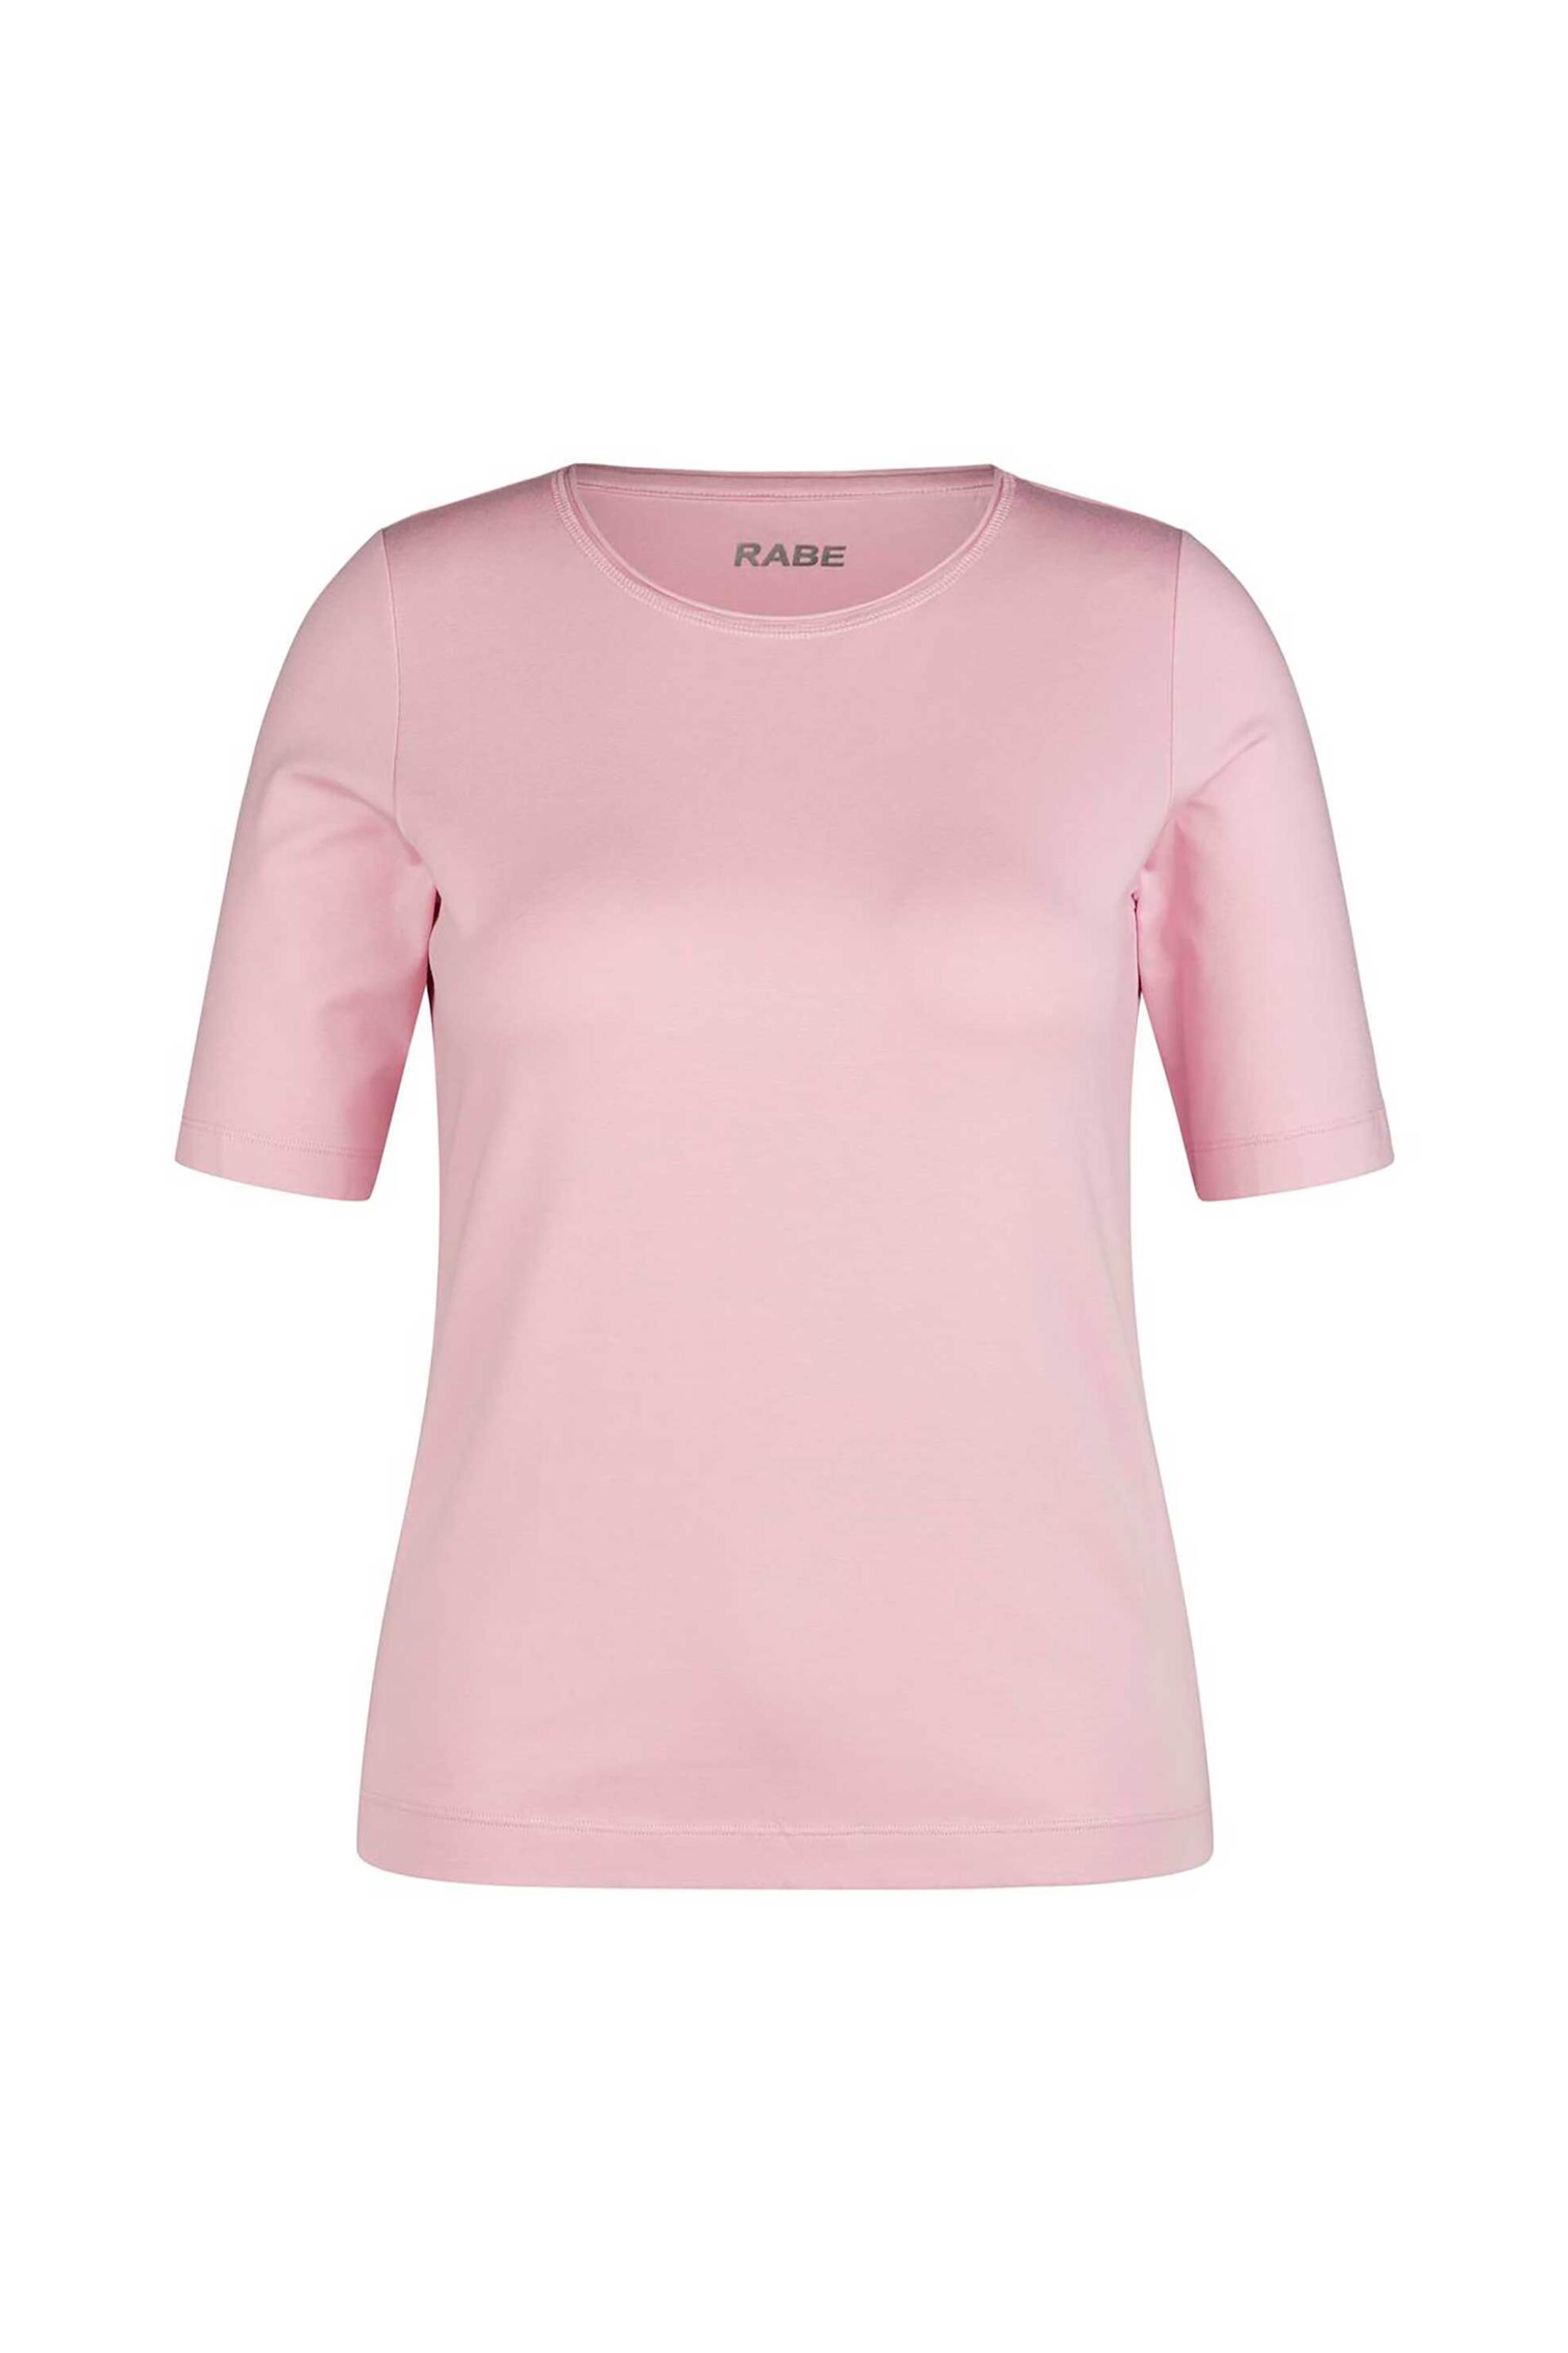 Rabe γυναικείο T-shirt μονόχρωμο - 52-113303 Ροζ 9-4879000250|ED1095|50